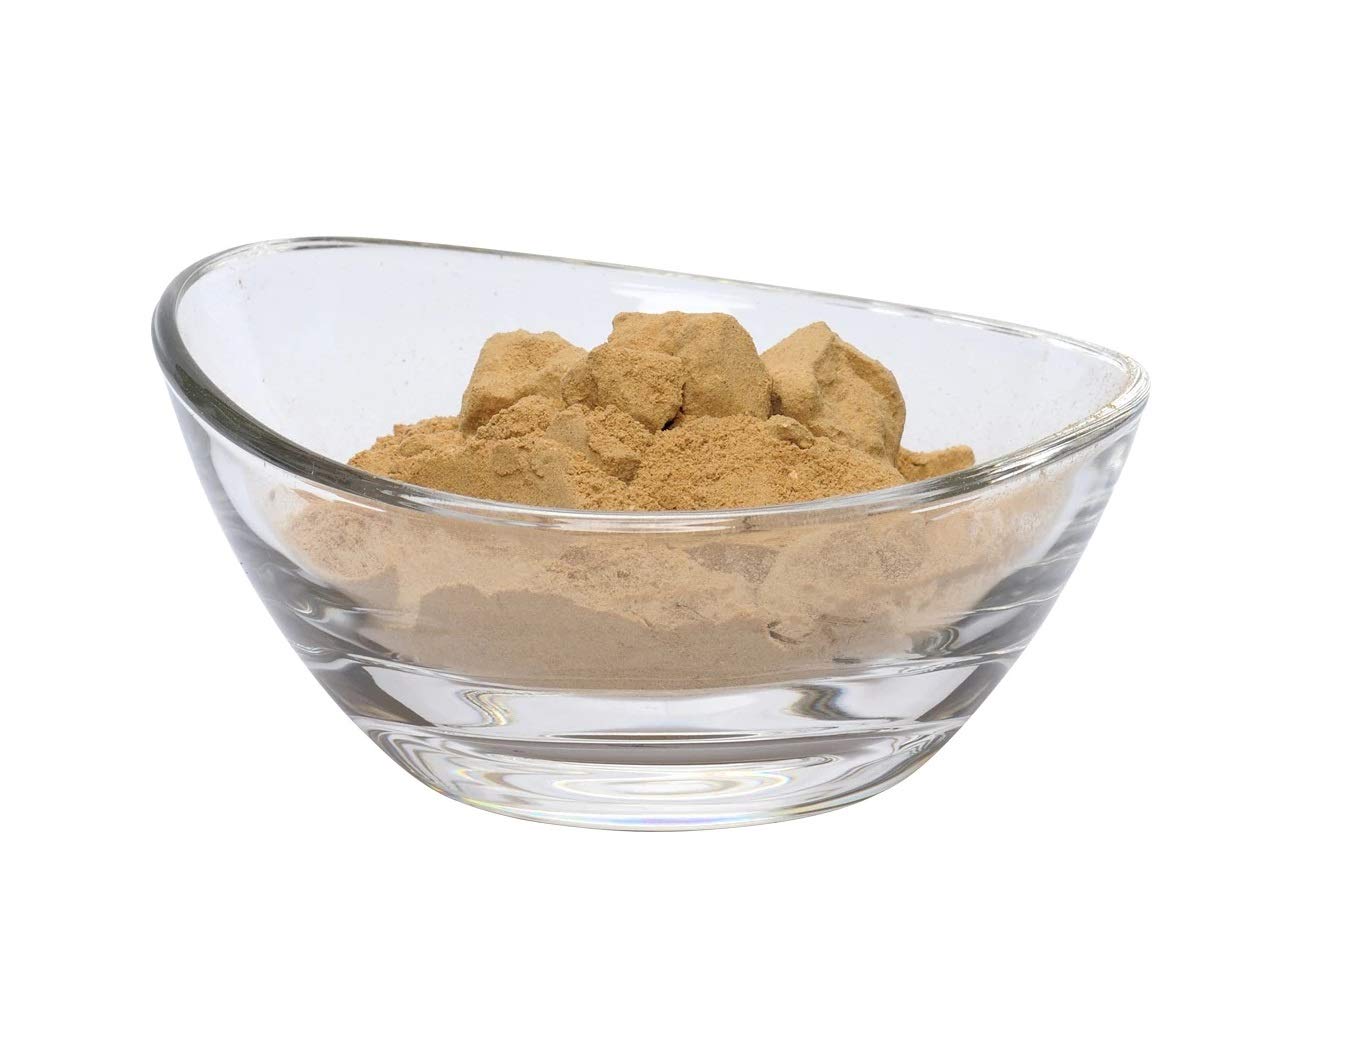 Natural Amla Powder 1 kg for Hair care - hennahubstore